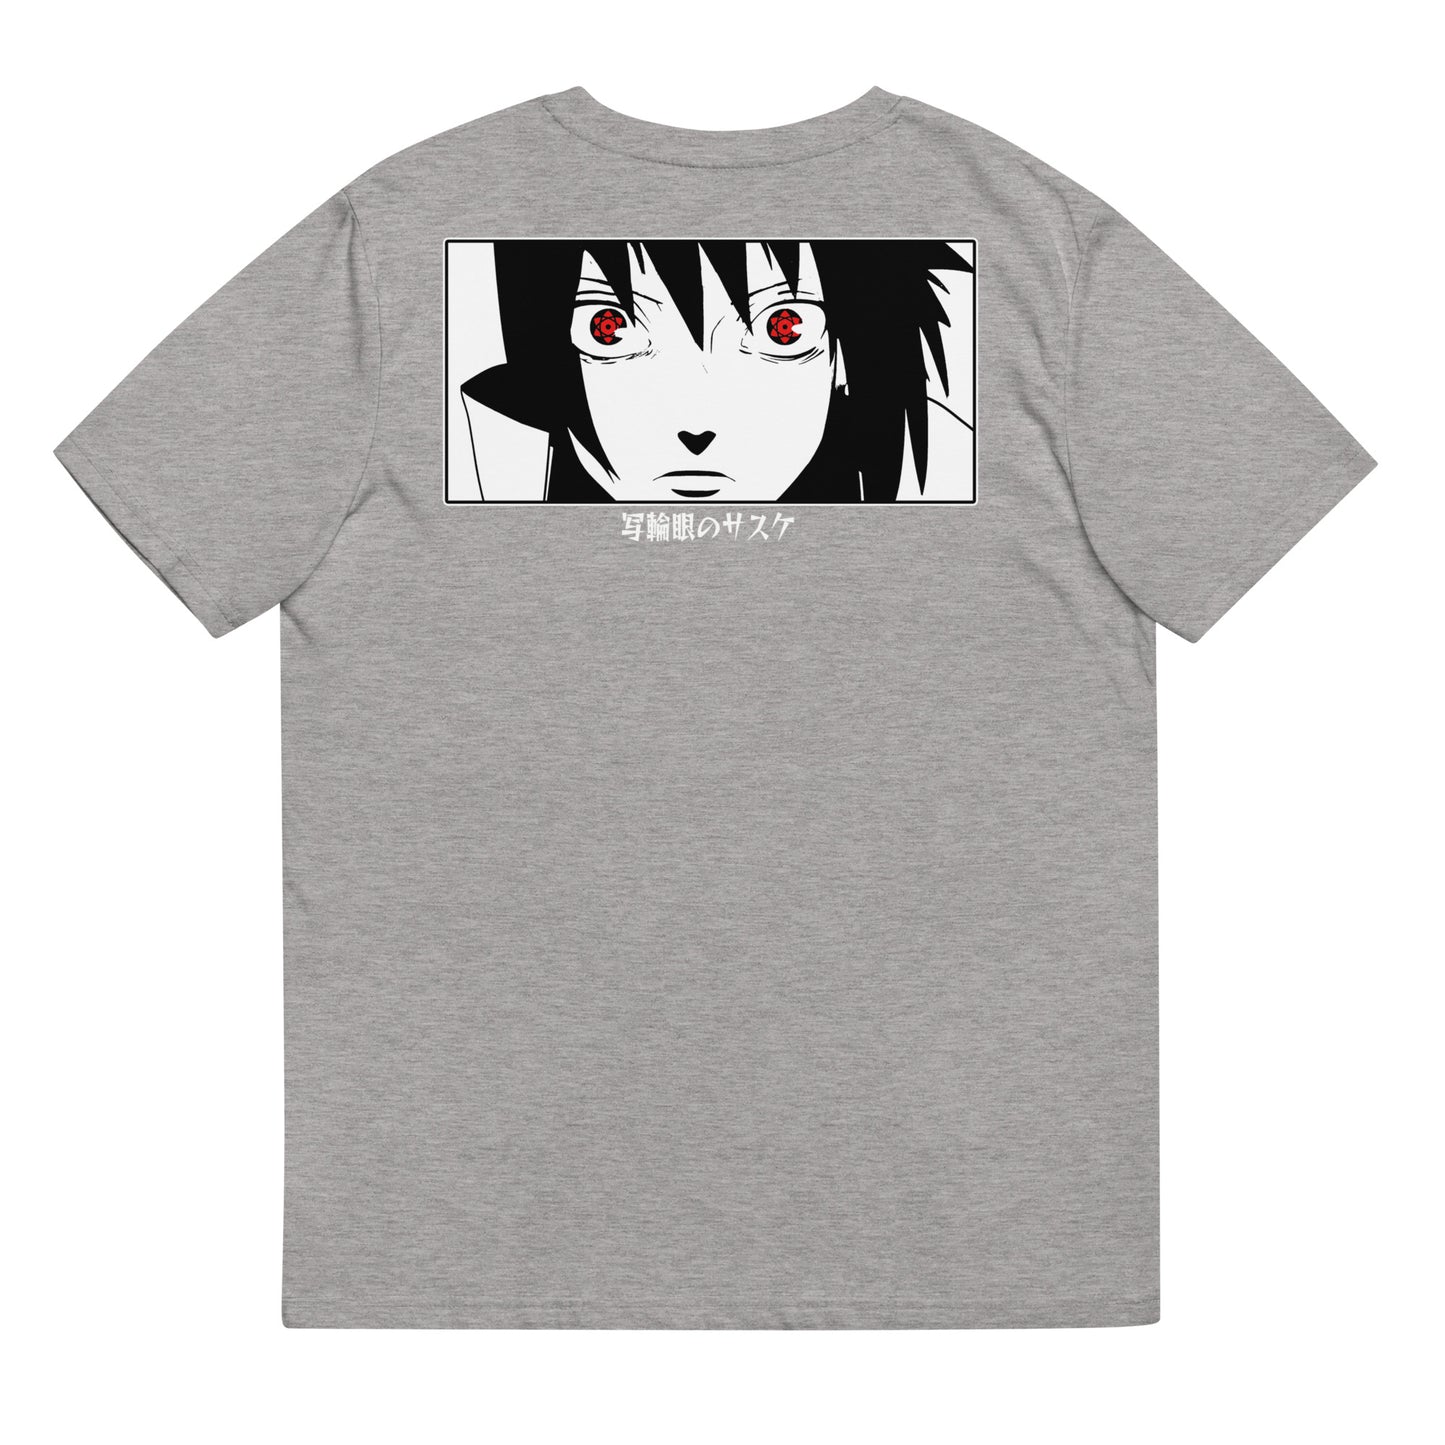 Sasuke Portrait T-Shirt, Naruto Anime